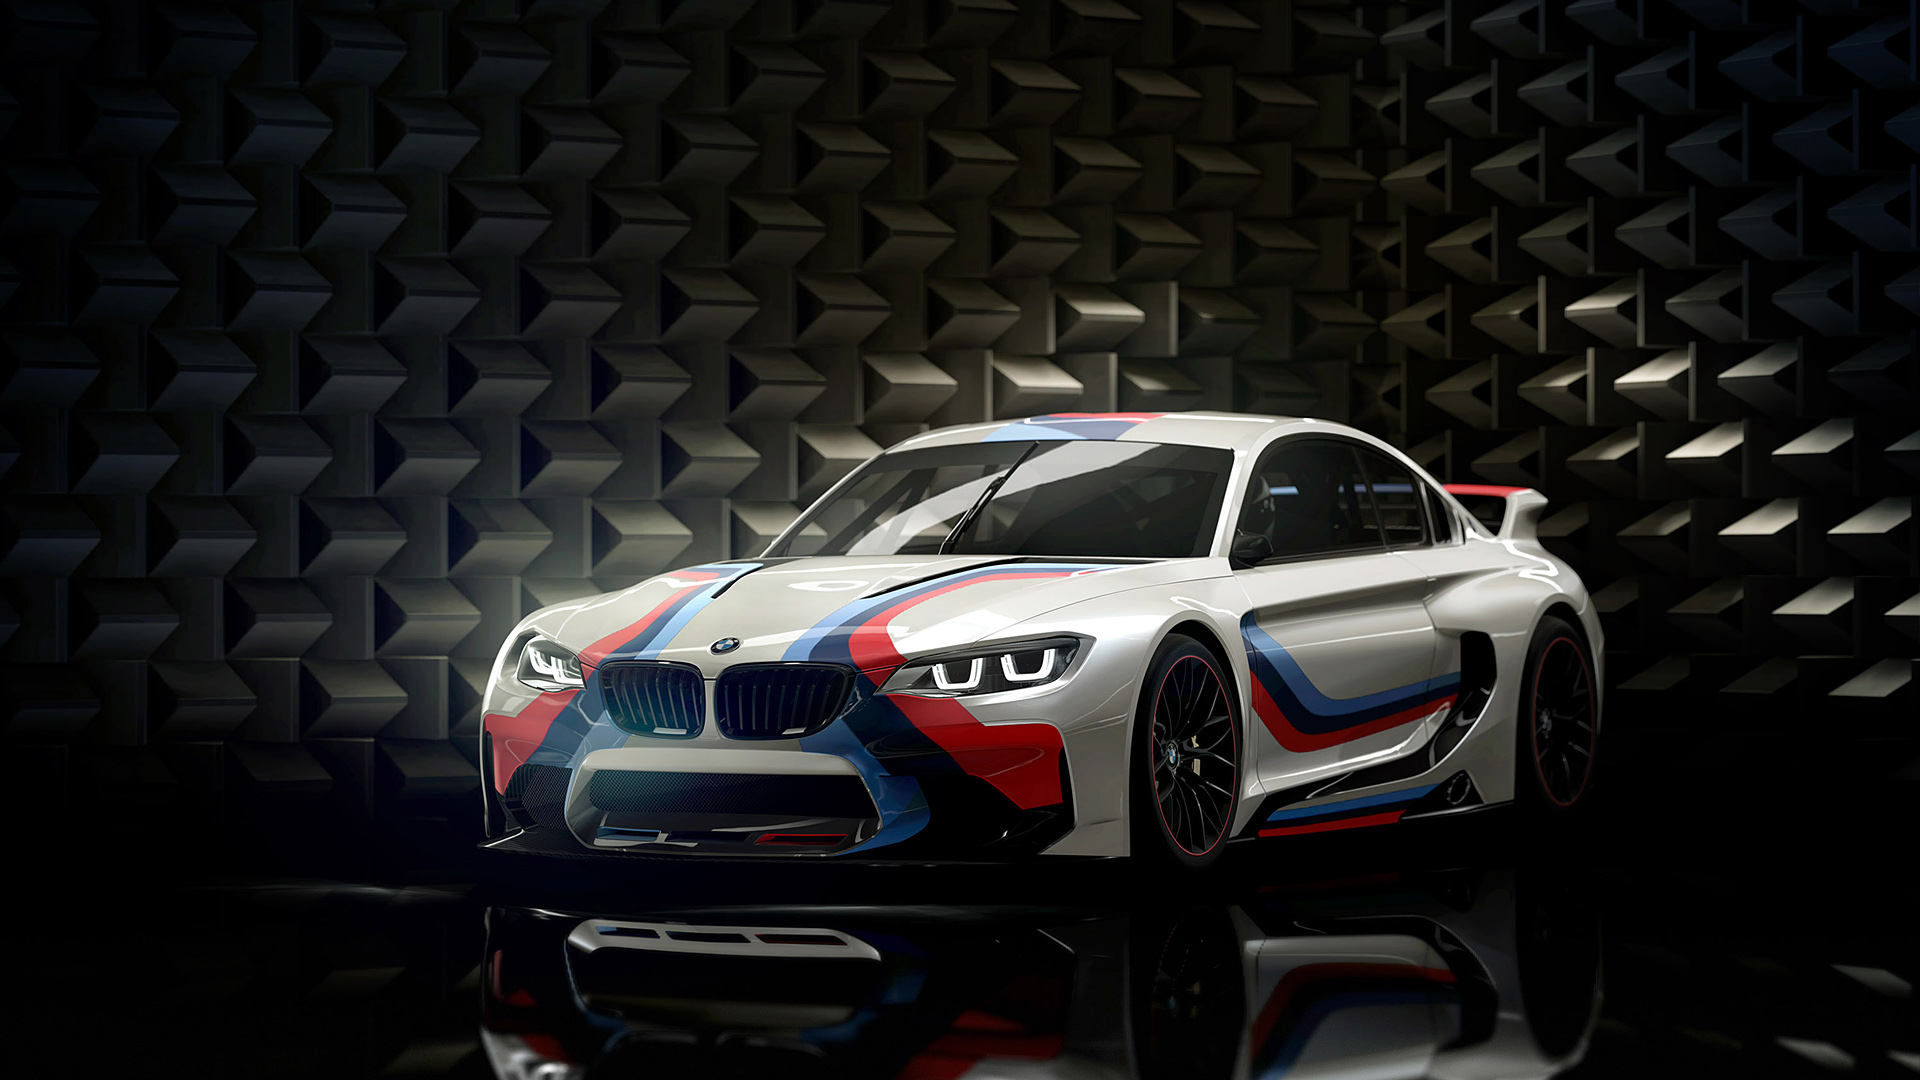  2014 BMW Vision Gran Turismo Wallpaper.